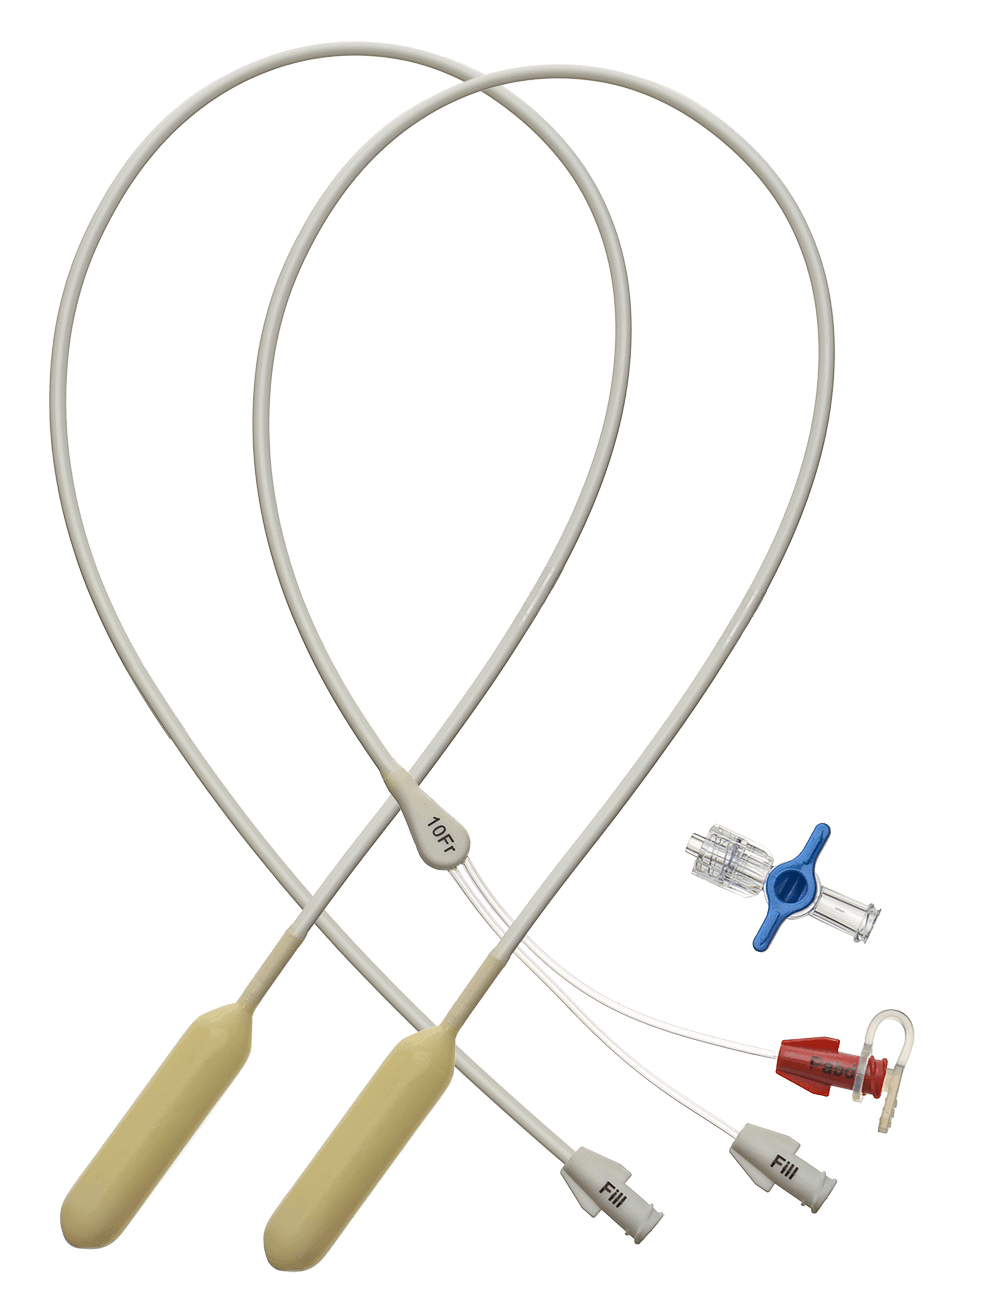 Rectal Urodynamic Catheters